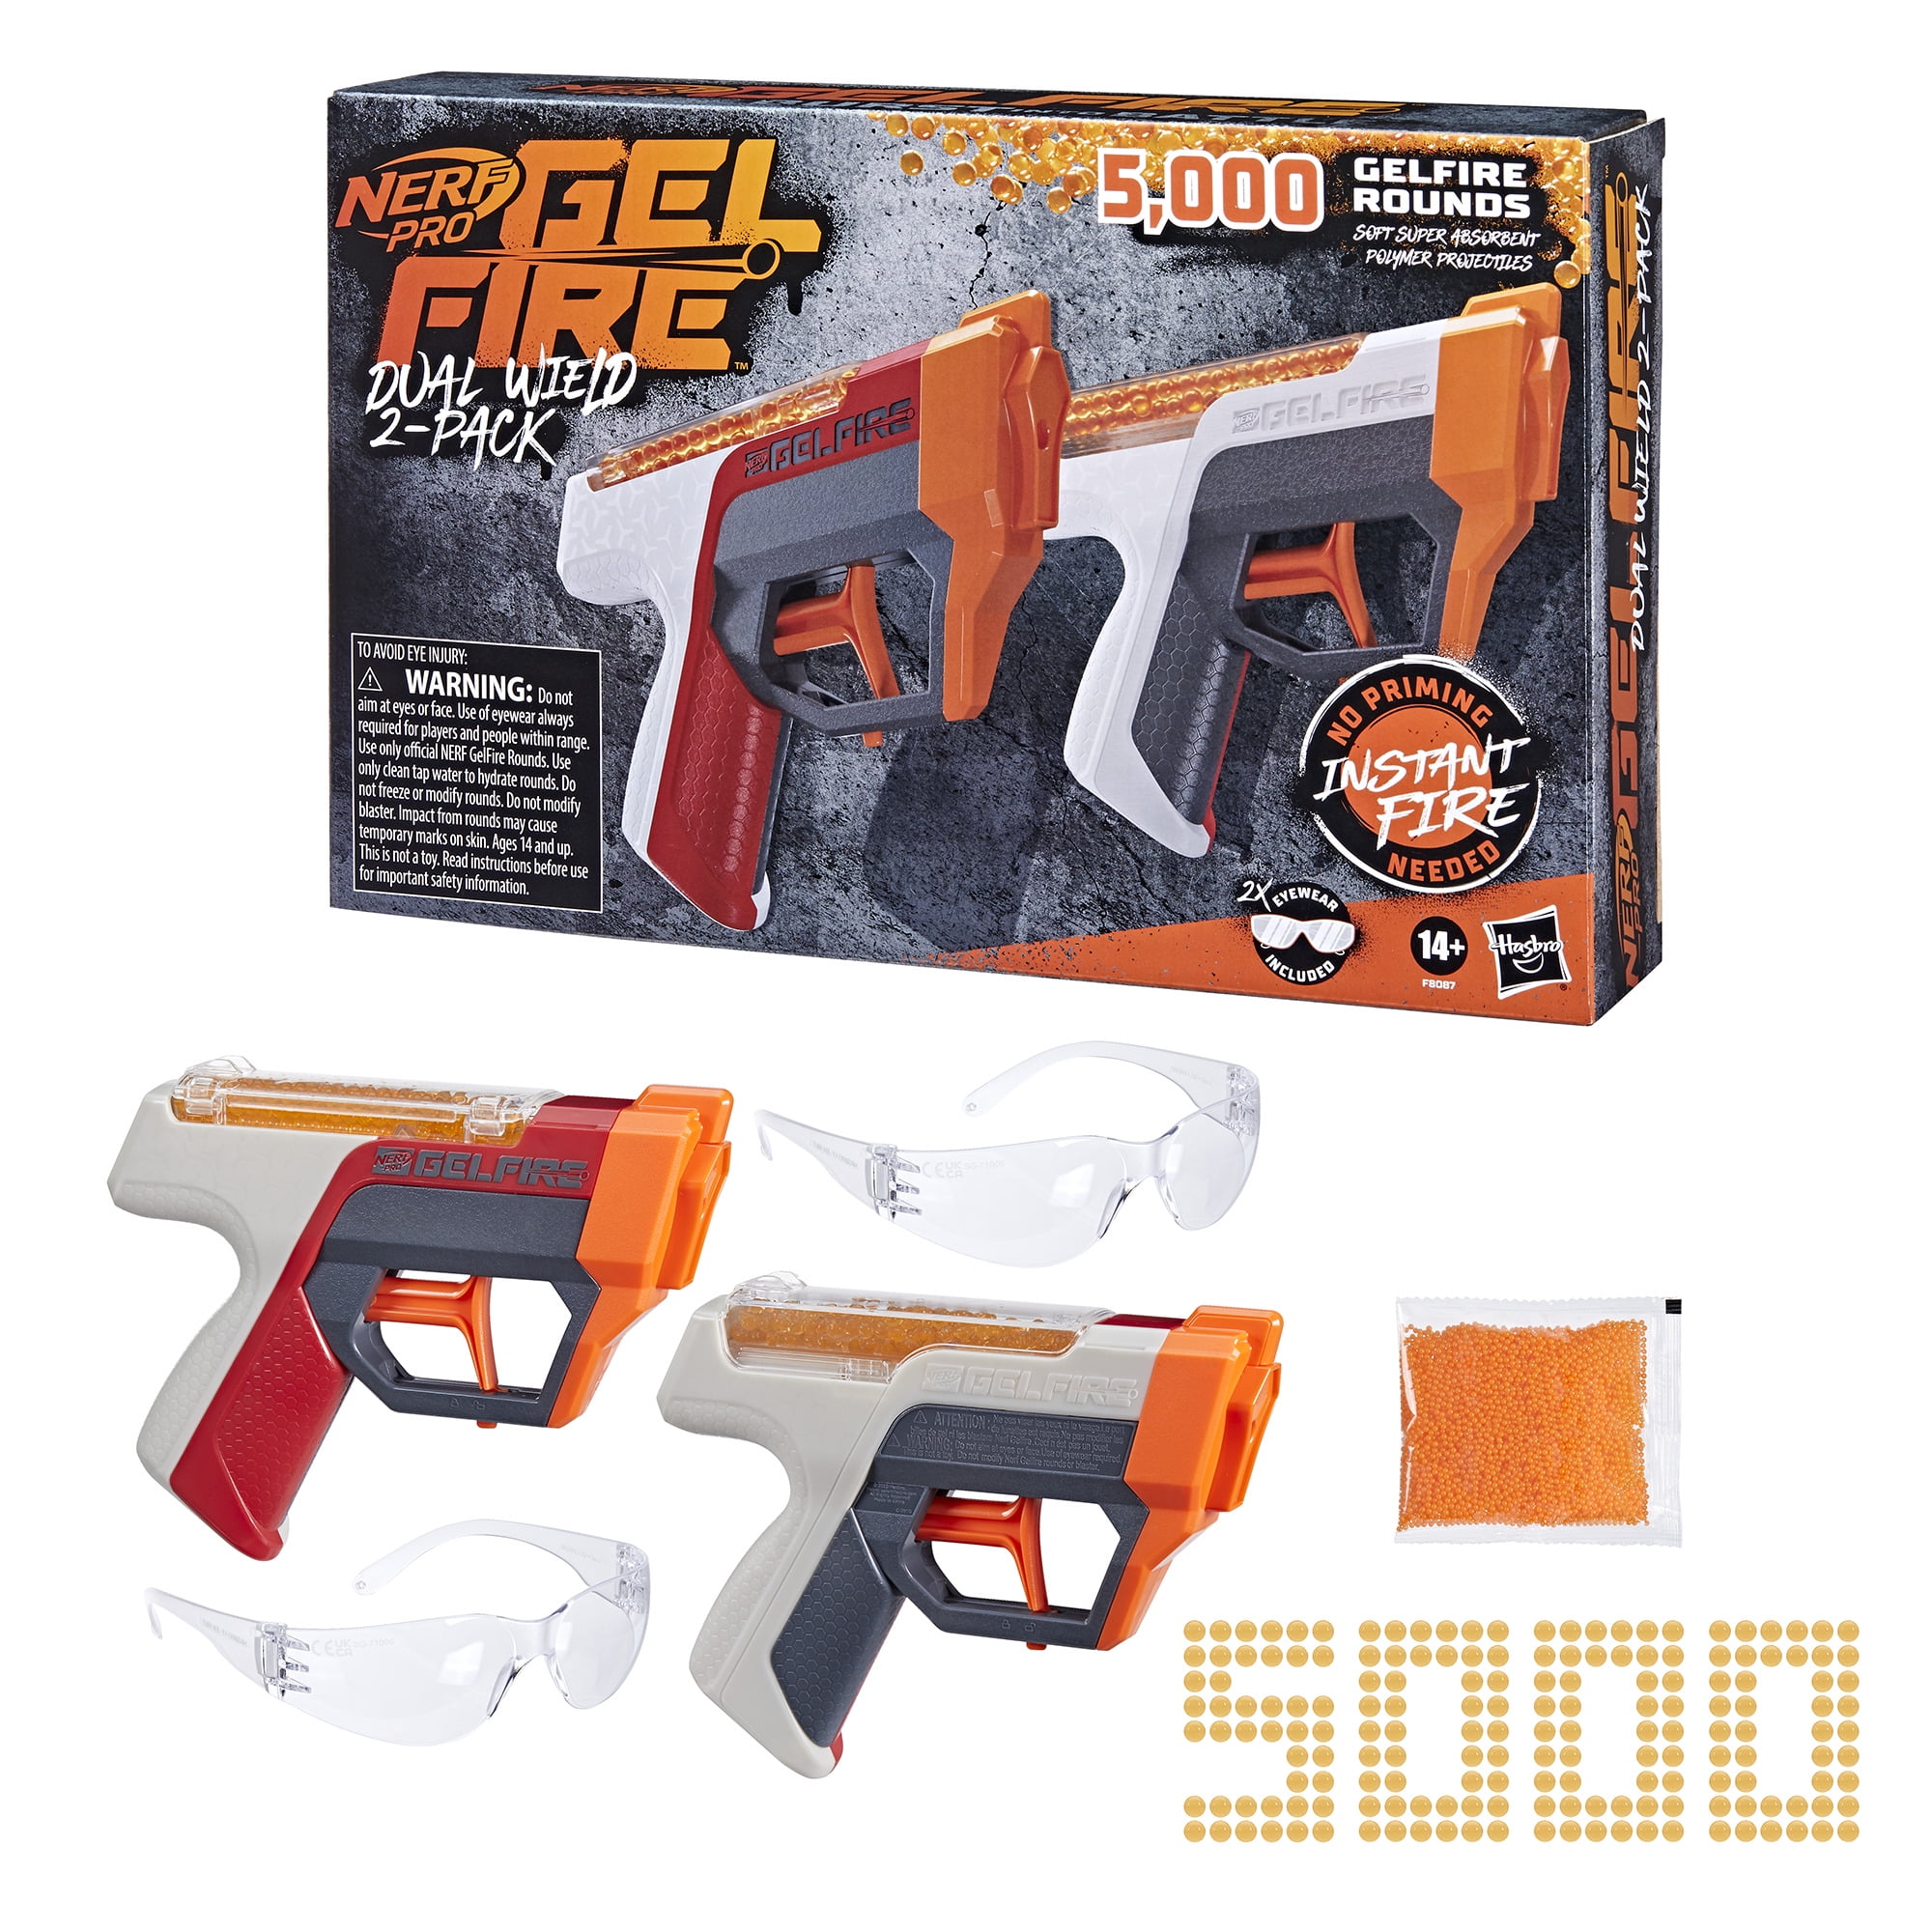 Nerf Pro Gelfire Dual Wield 2-Pack Kids Toy Gel Blaster with 5000 ...